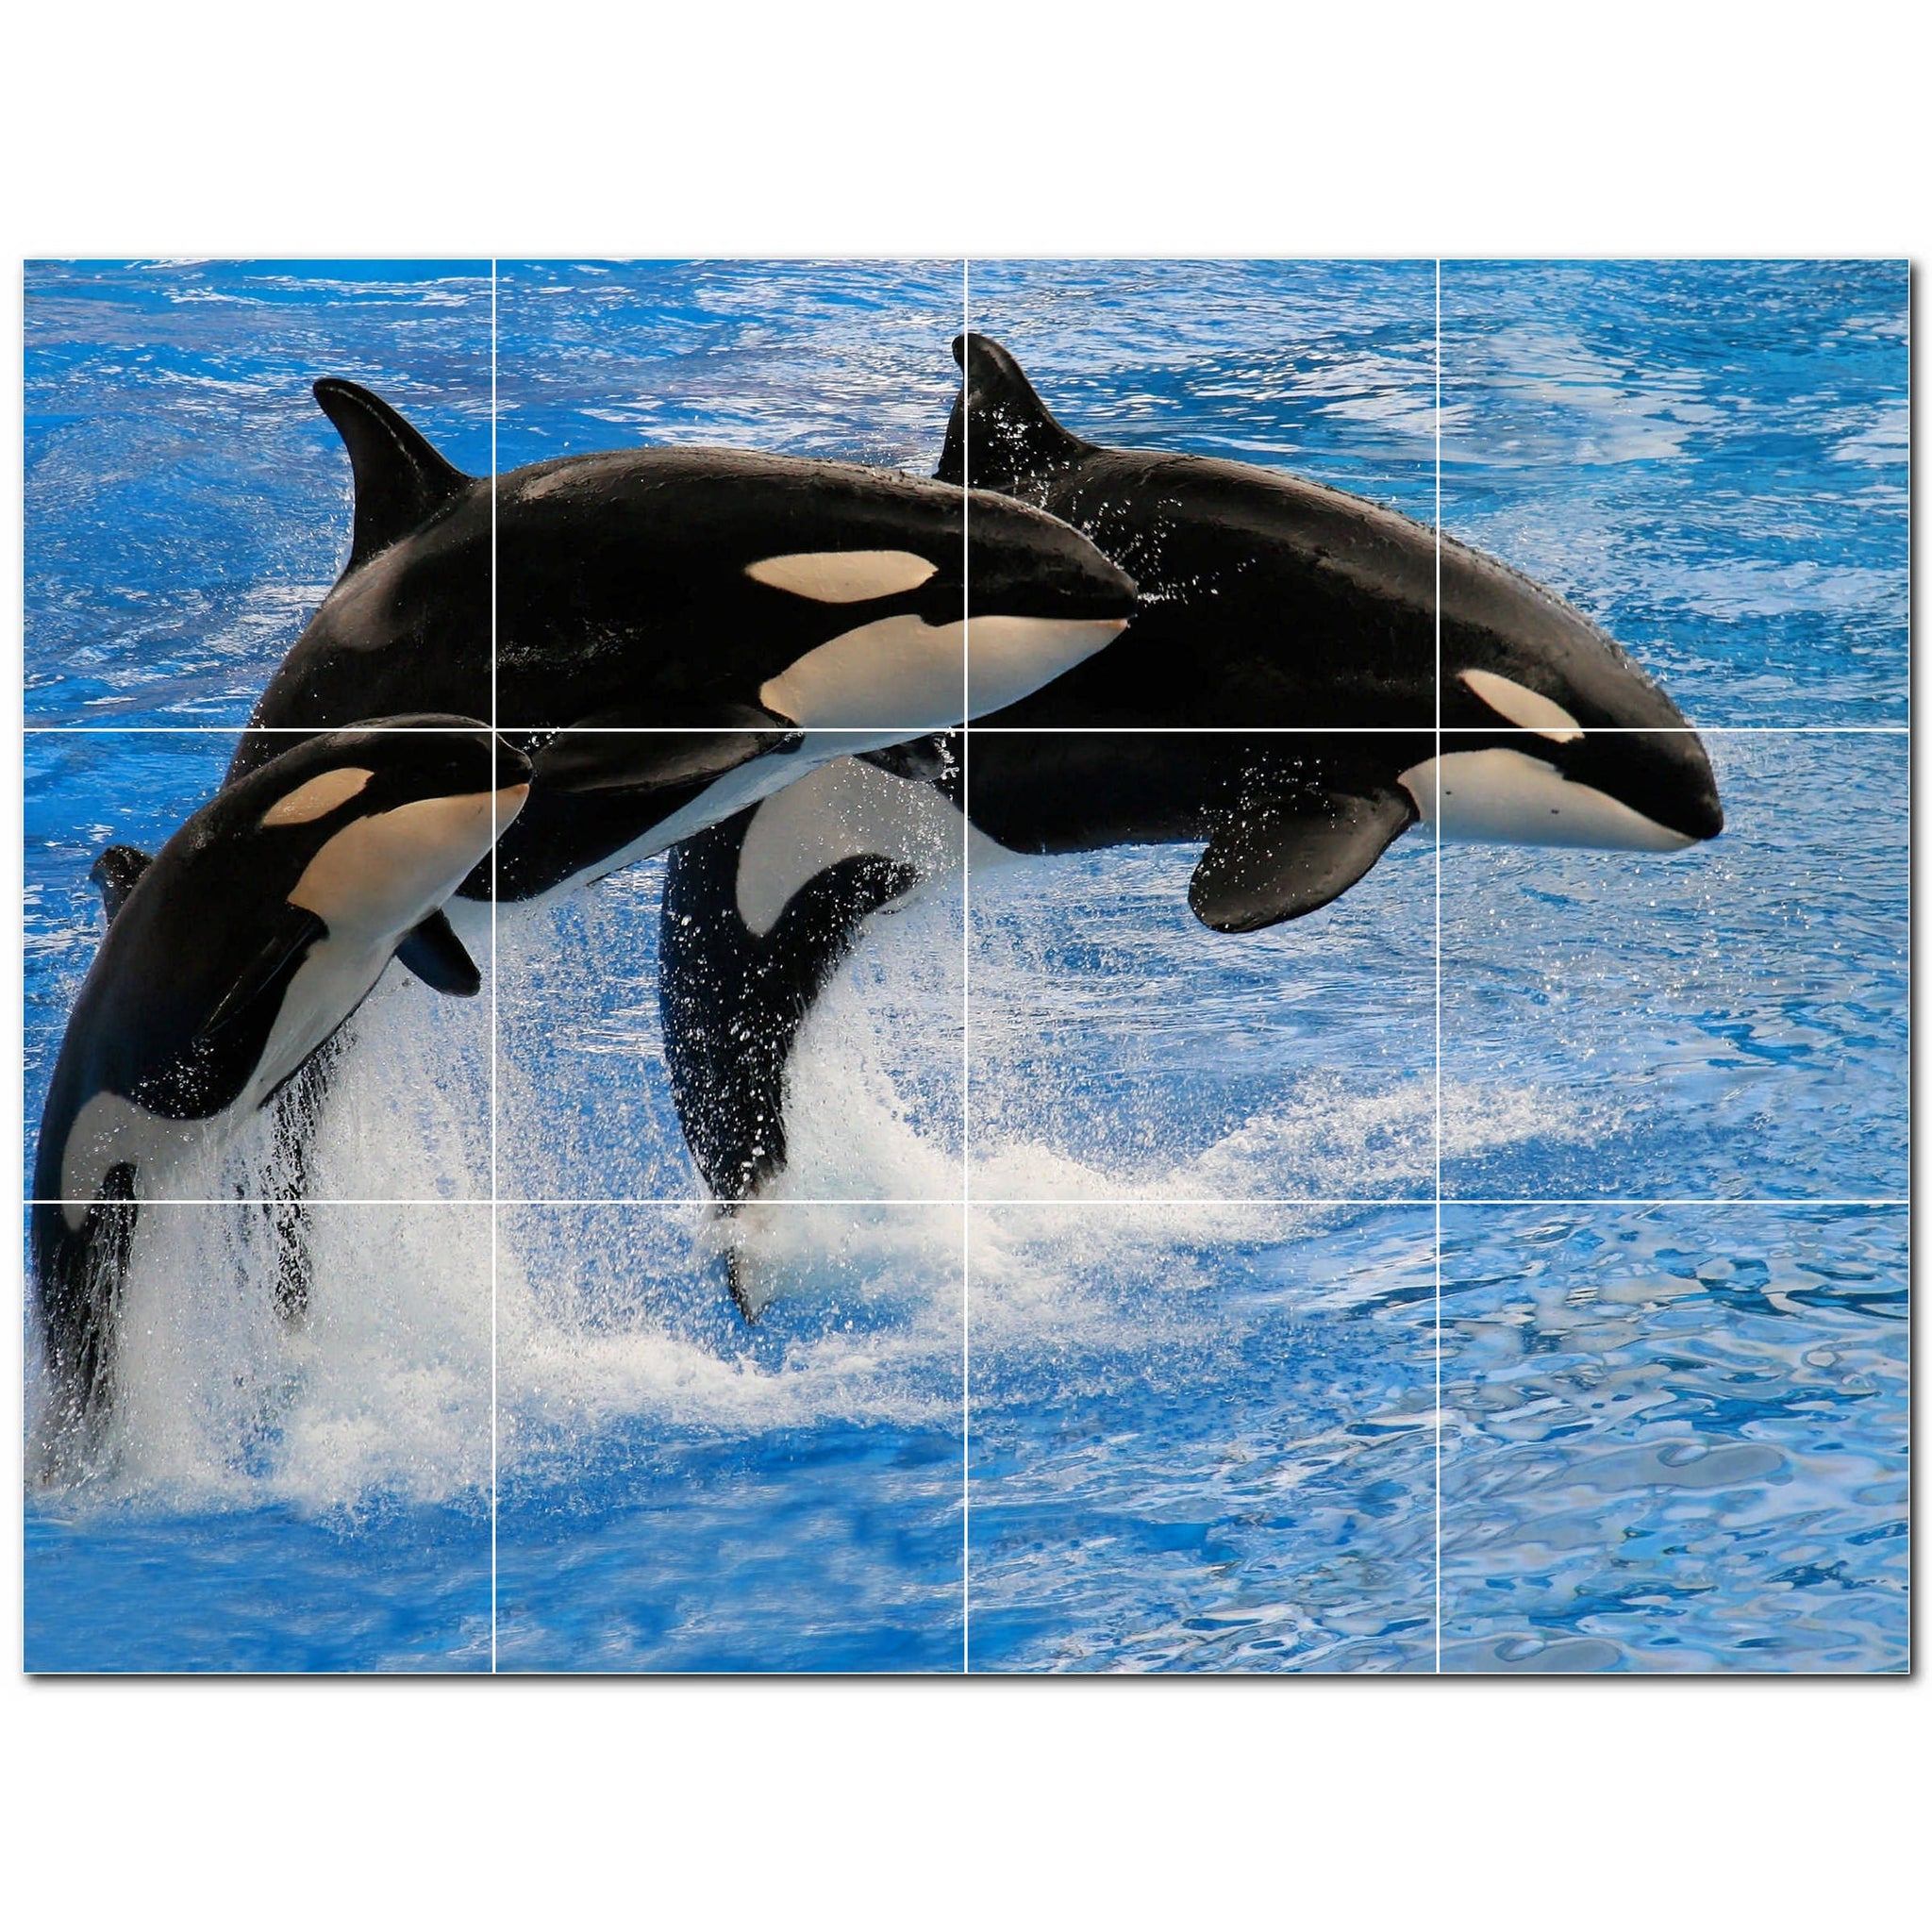 whale ceramic tile wall mural kitchen backsplash bathroom shower p501194